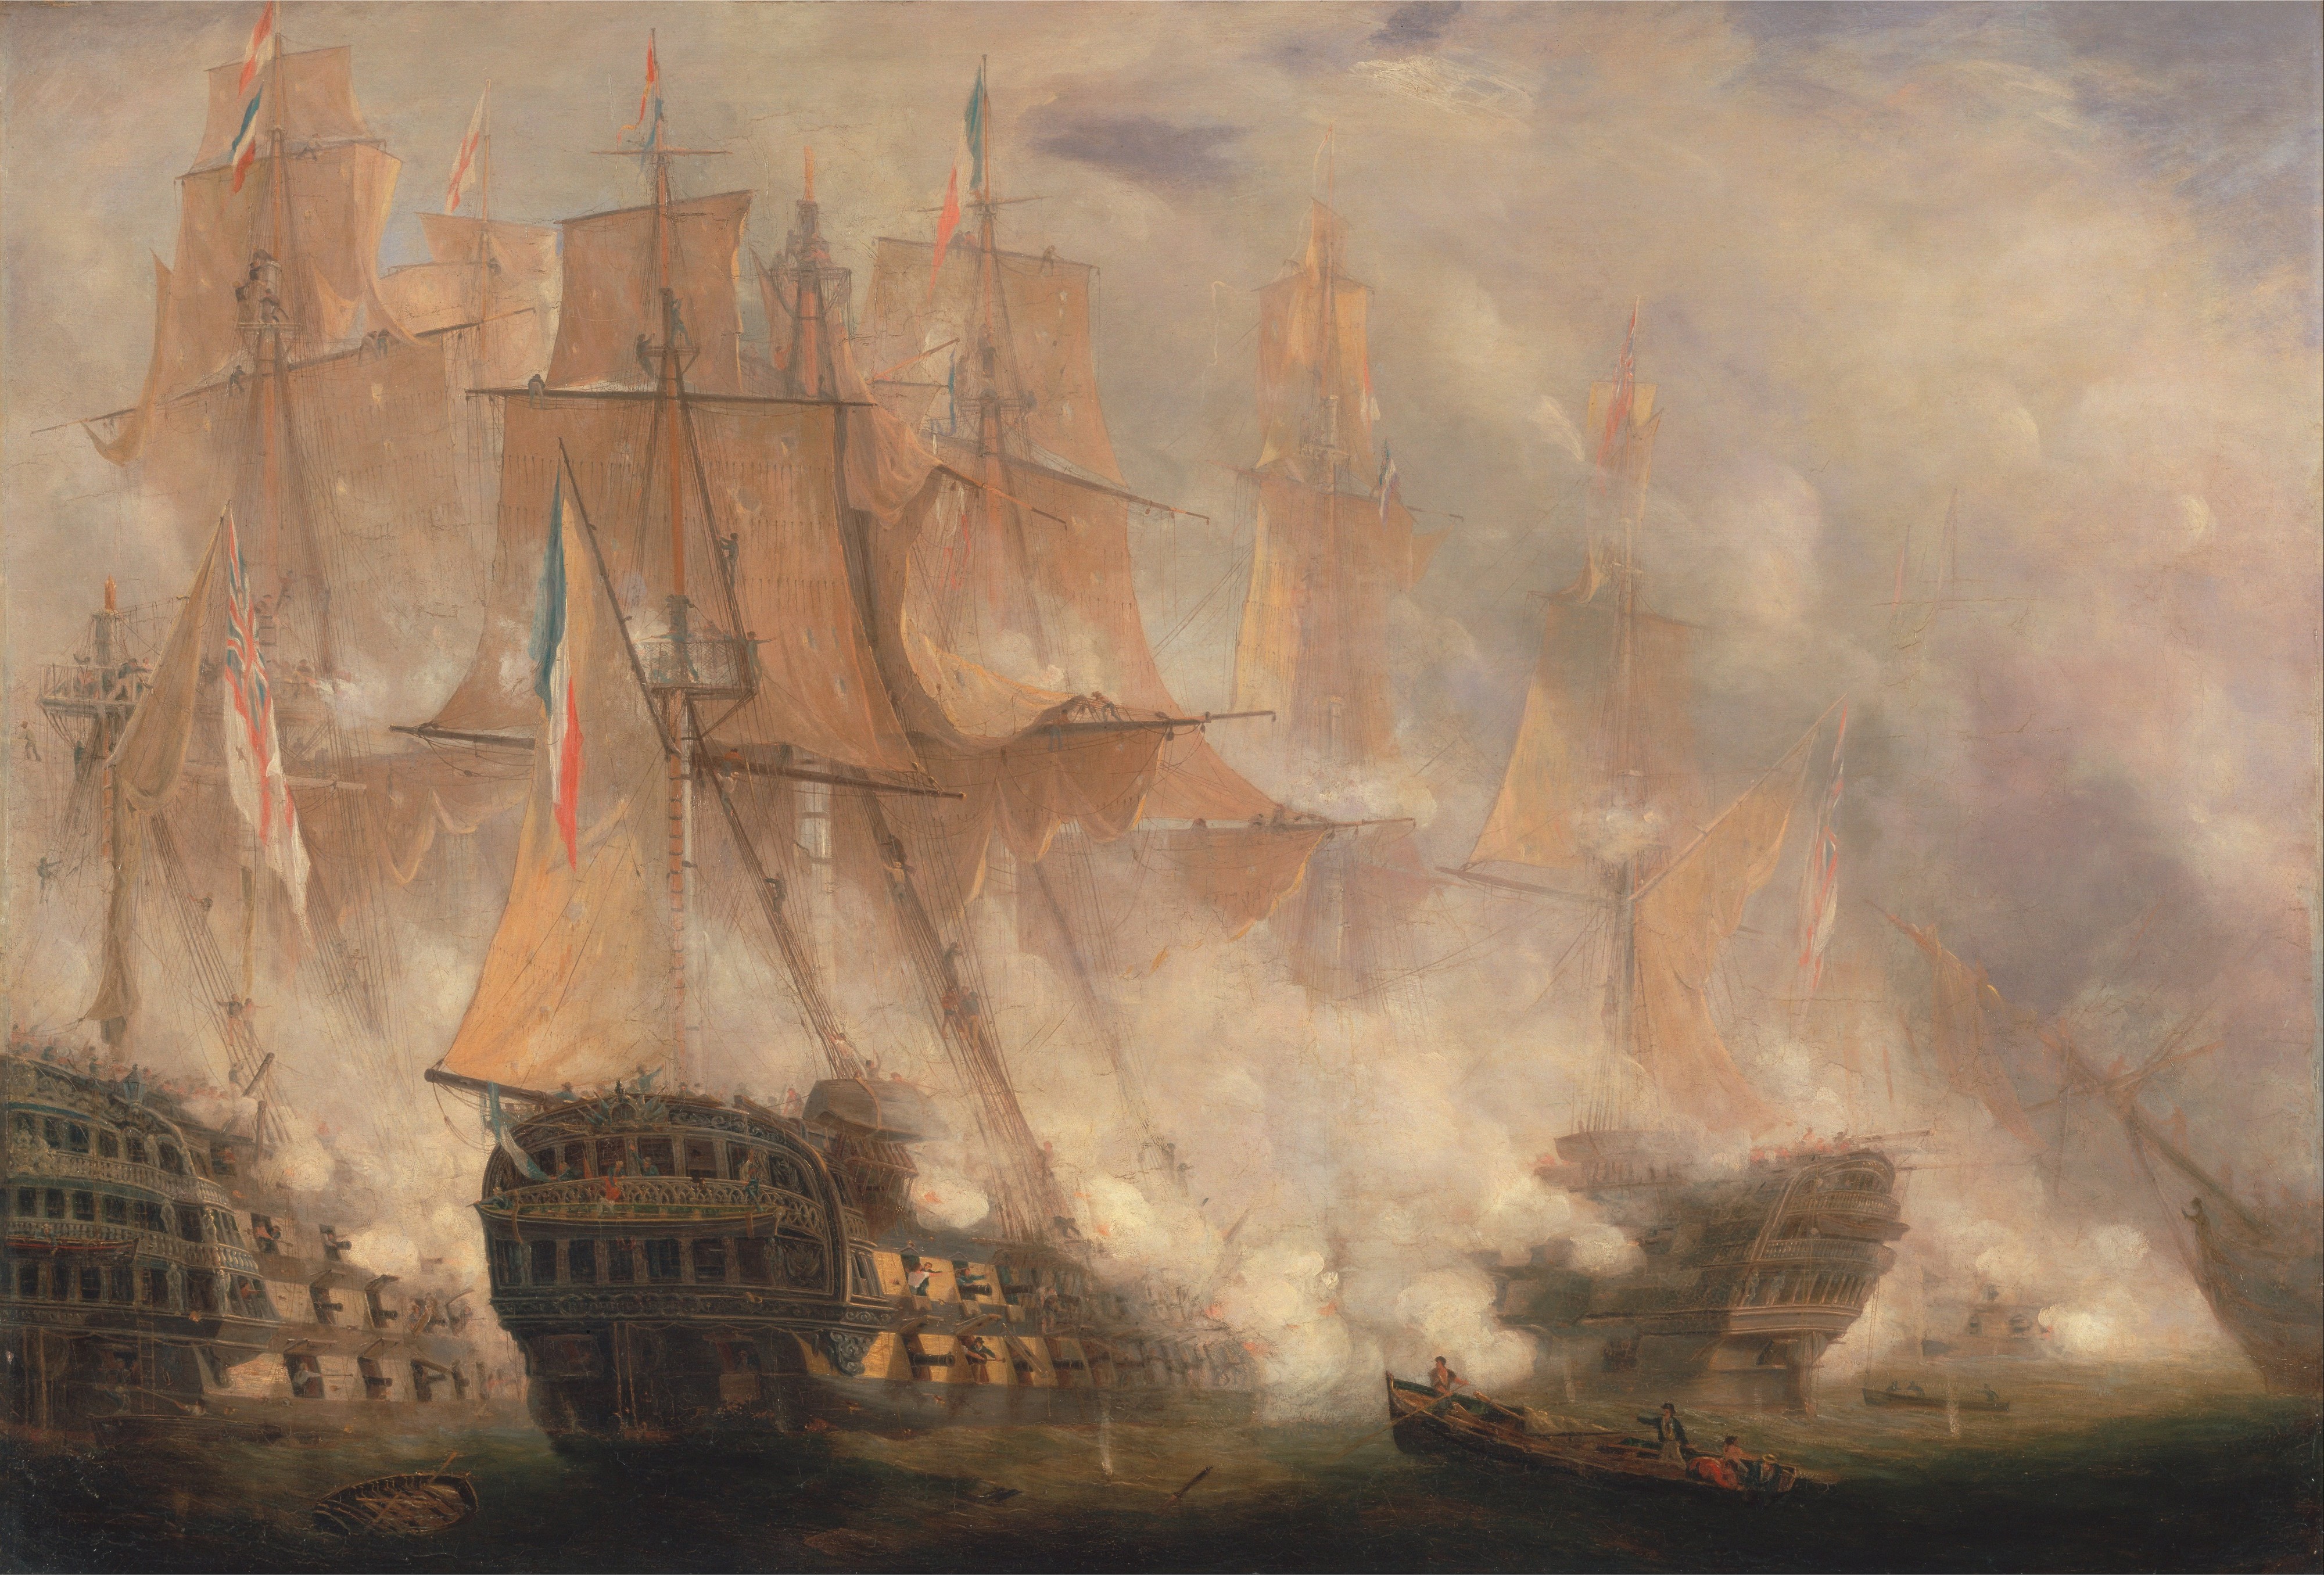 John Christian Schetky - The Battle of Trafalgar - Google Art Project